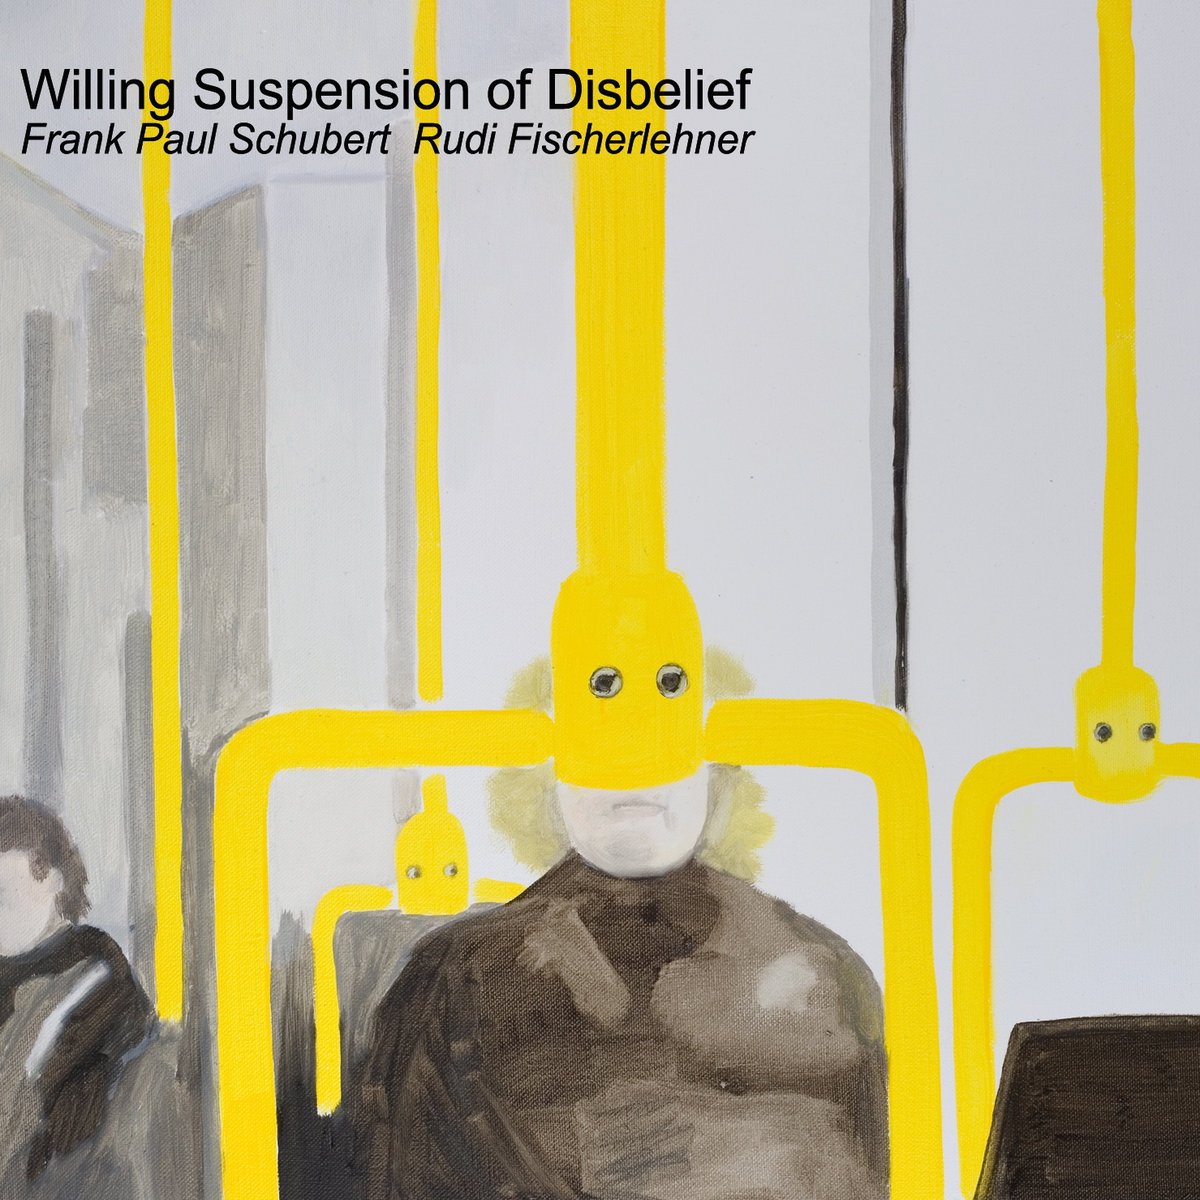 Willing Suspension of Disbelief